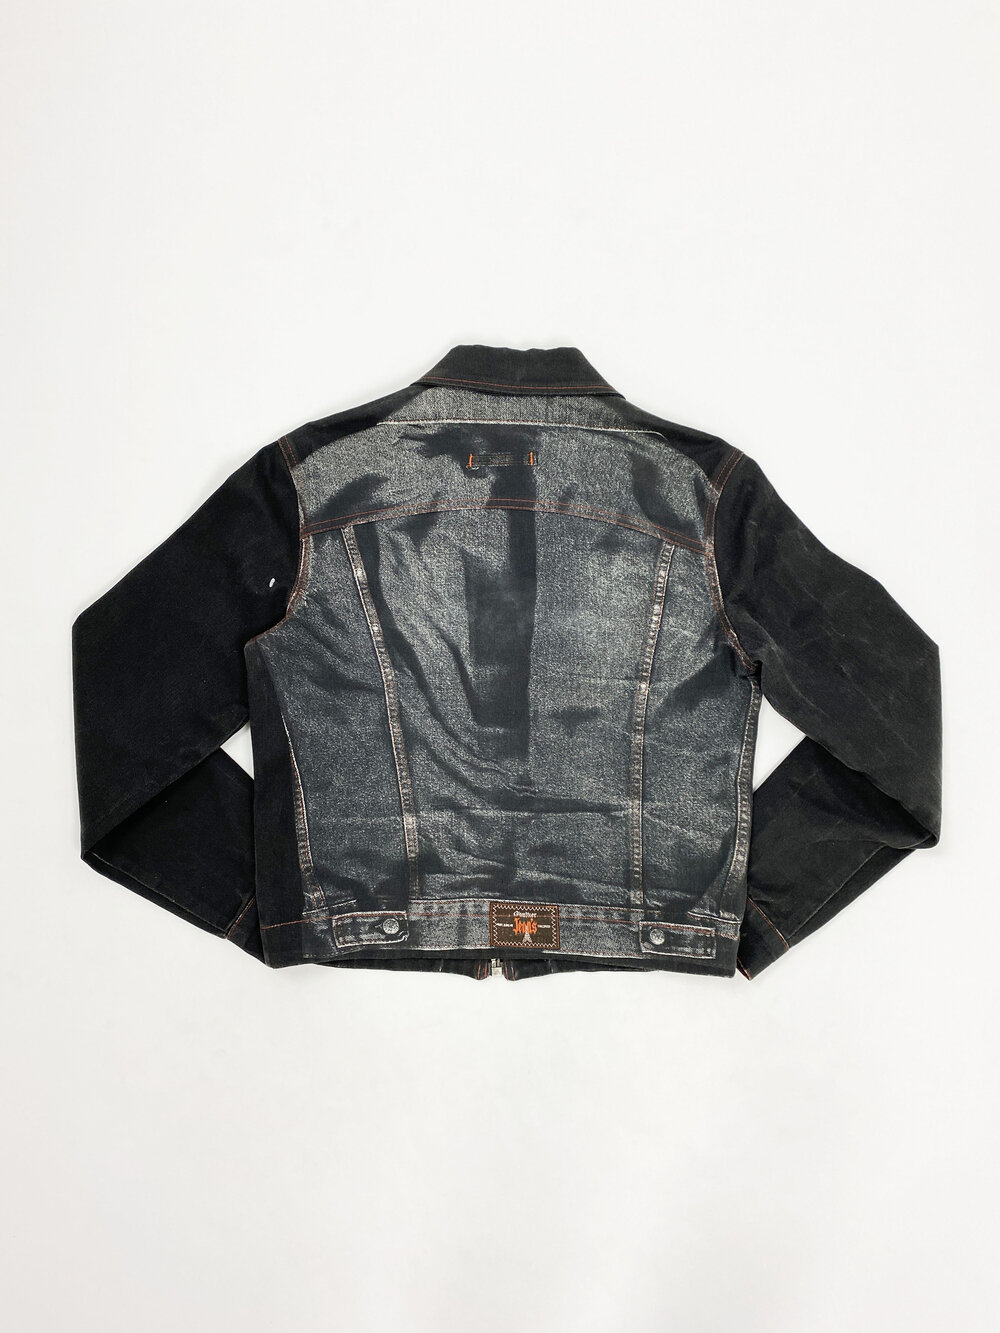 Jean Paul Gaultier trompe l'oeil jeans print jacket — JAMES VELORIA